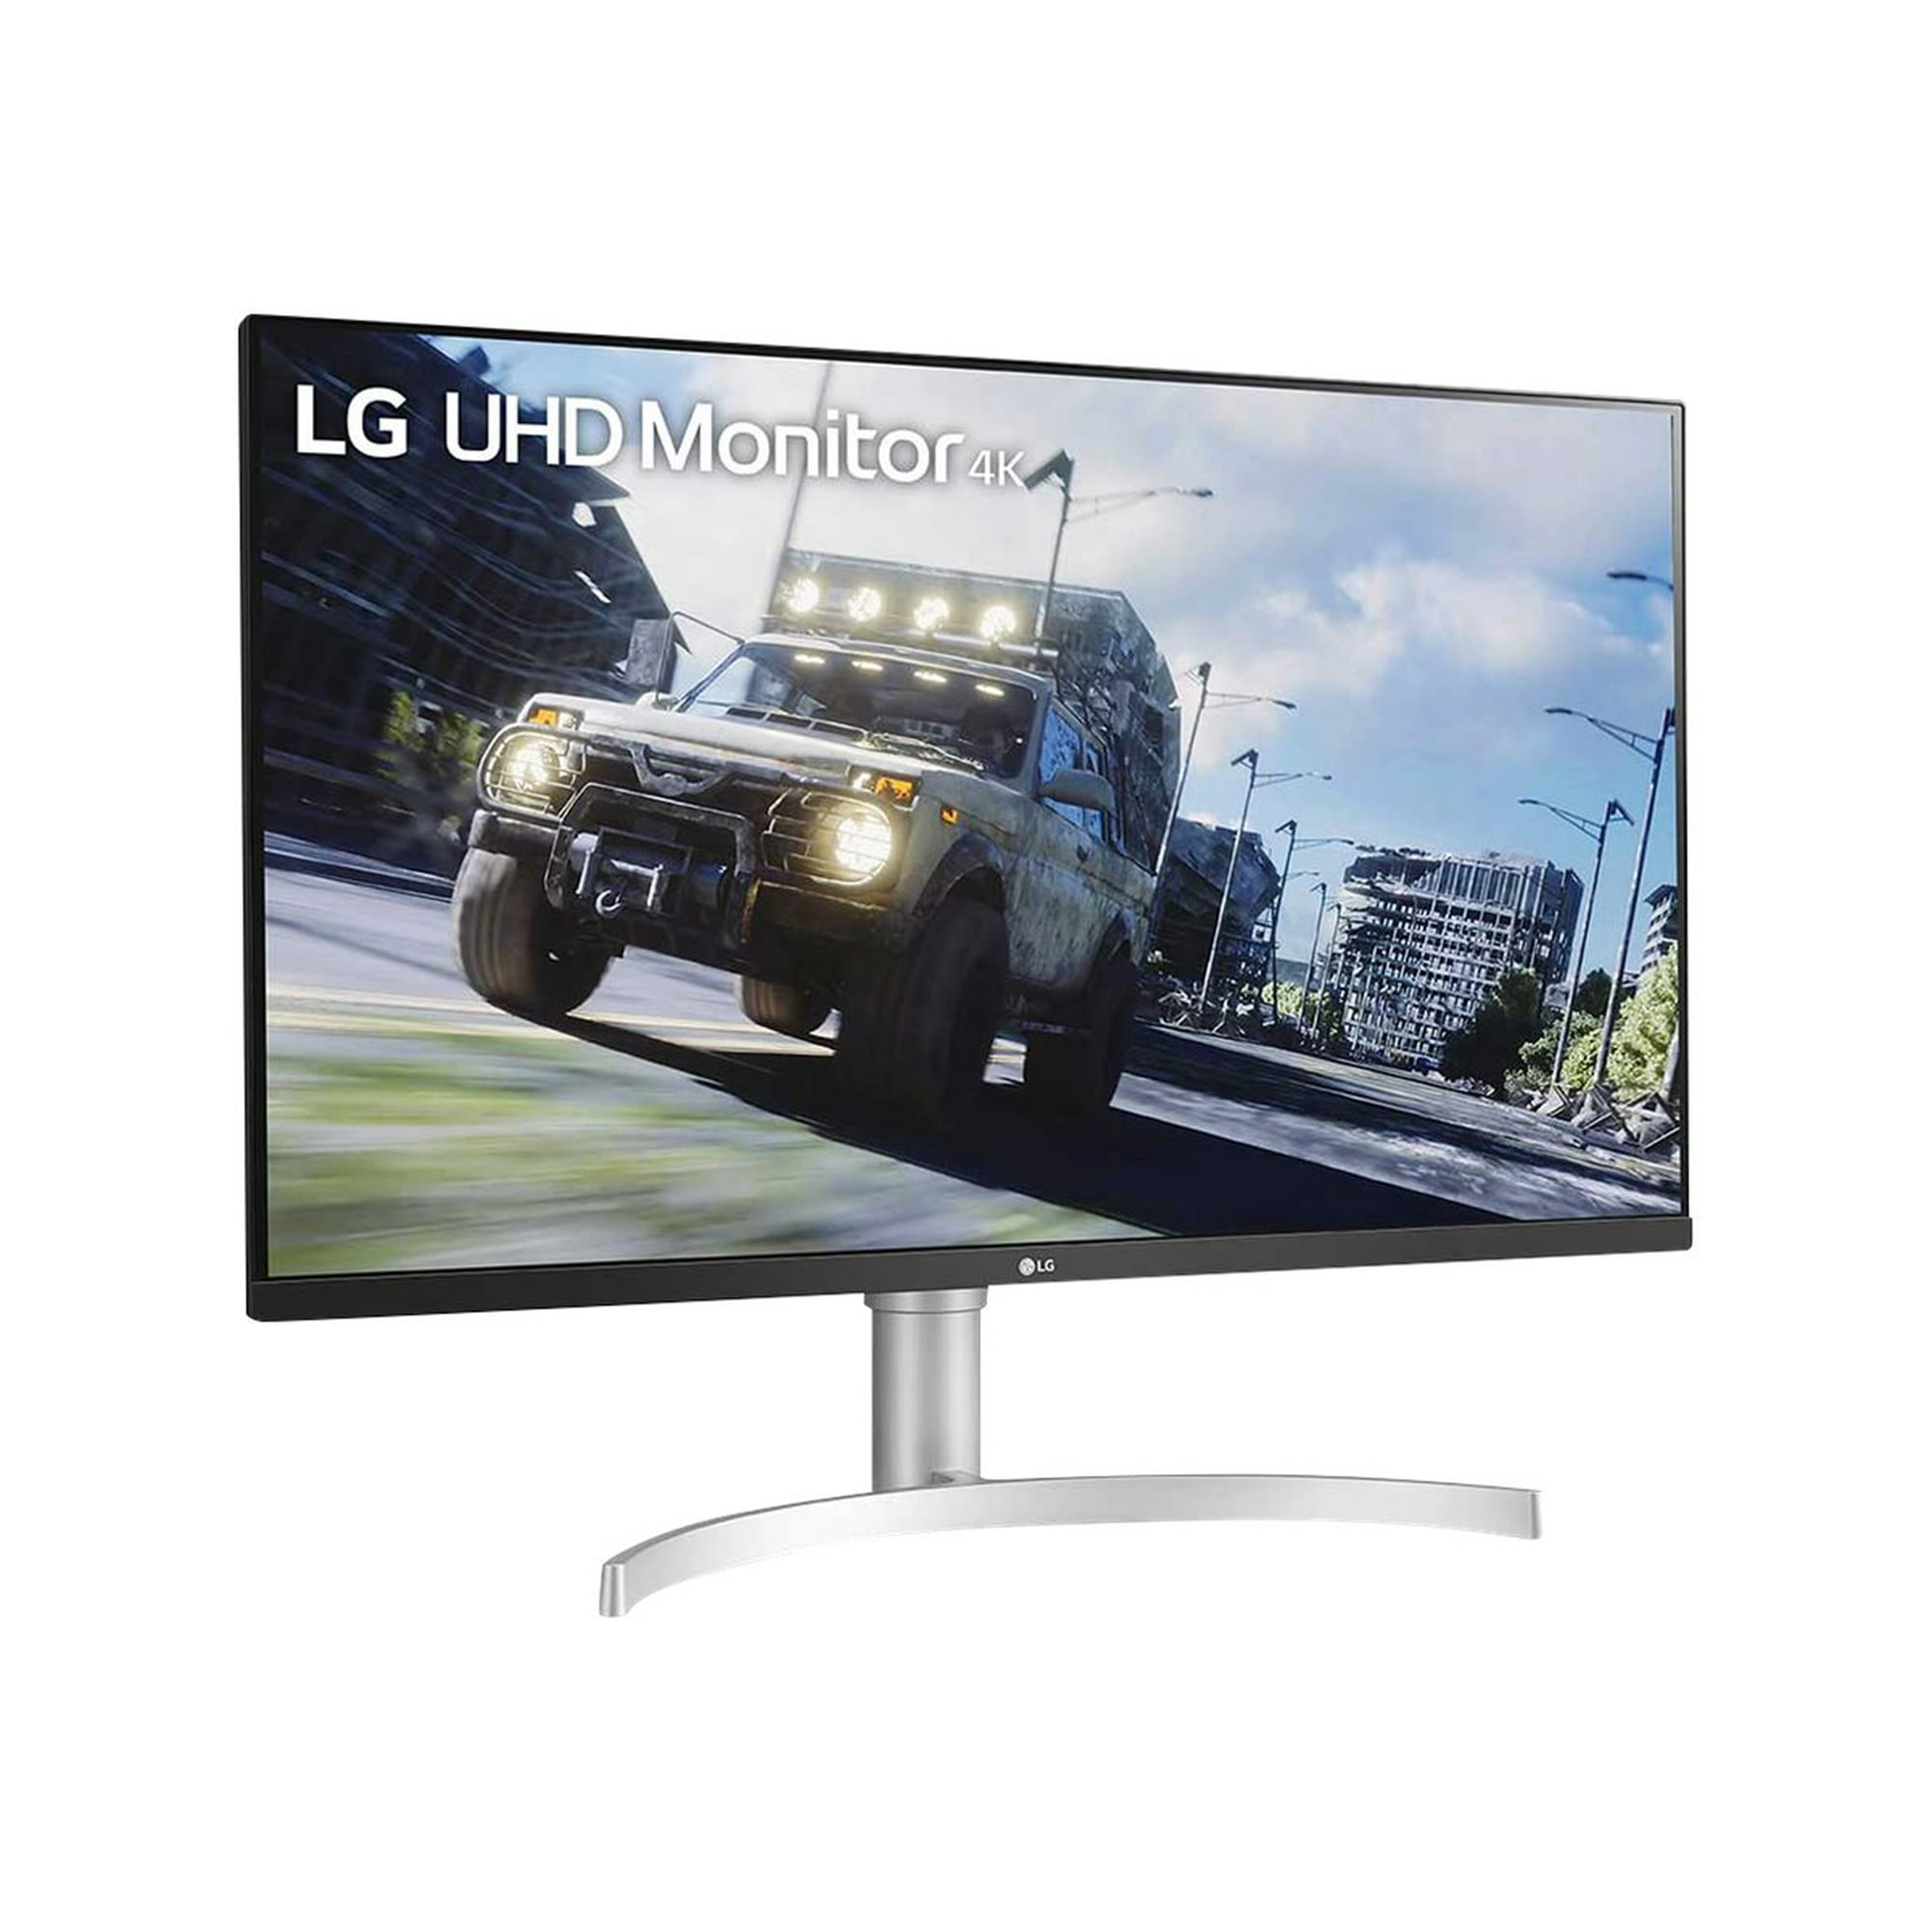 LG 32UN550-W - LED monitor - 32